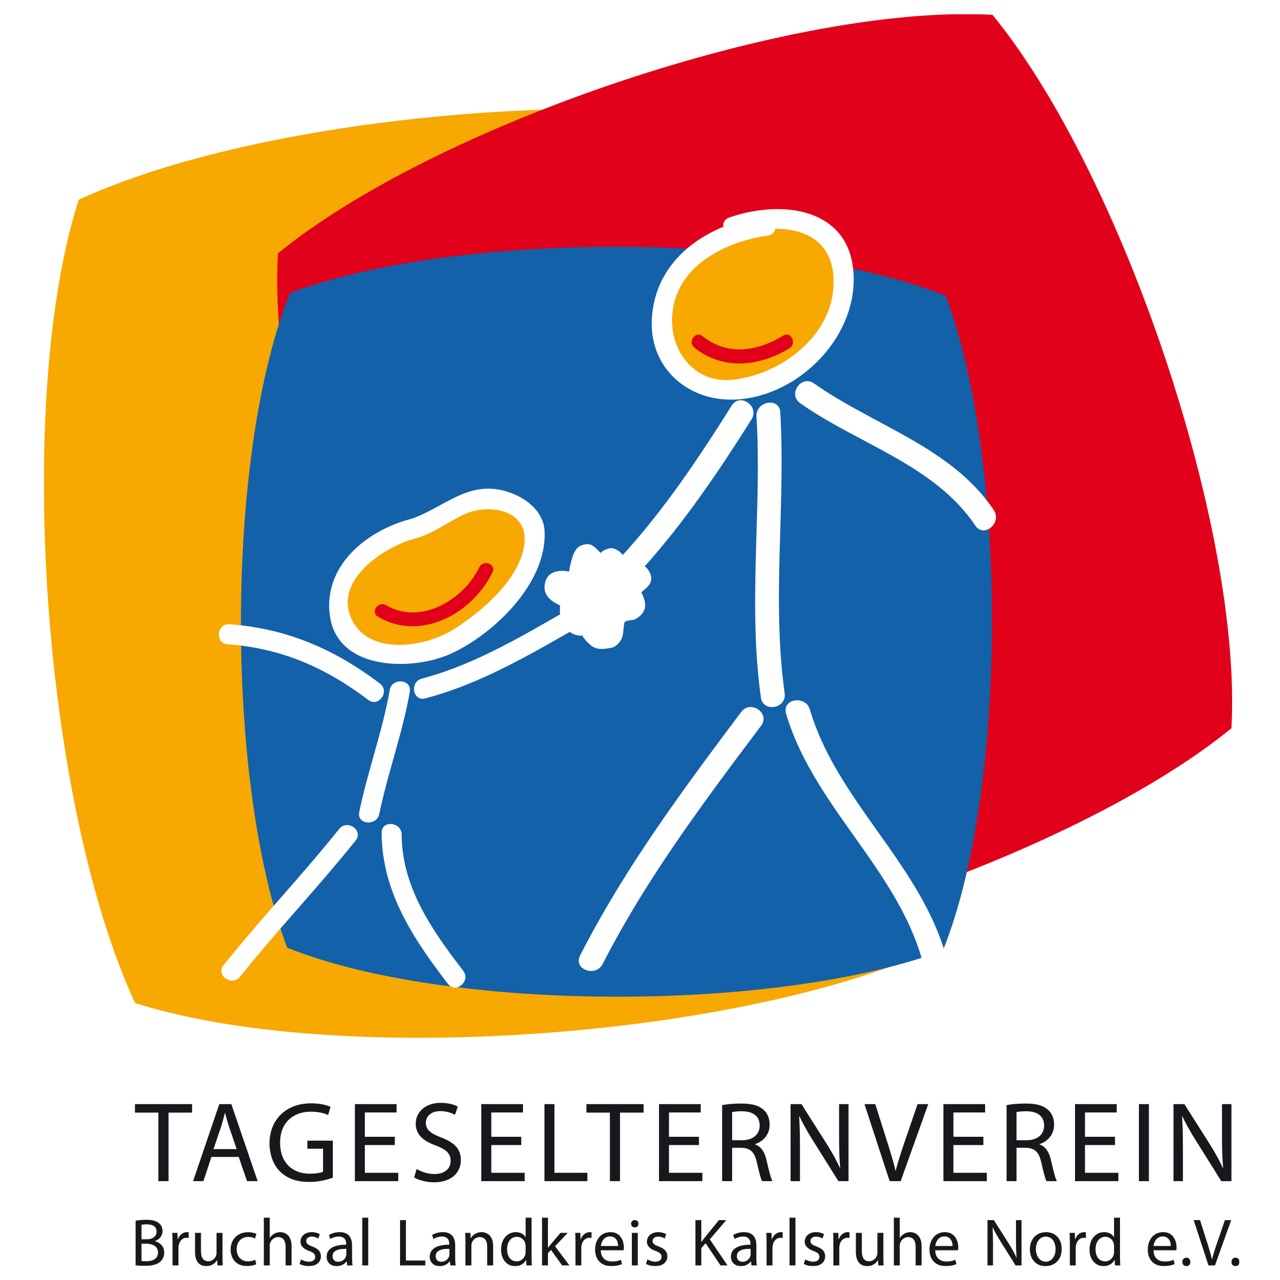                                                     Logo Tageselternverein                                    